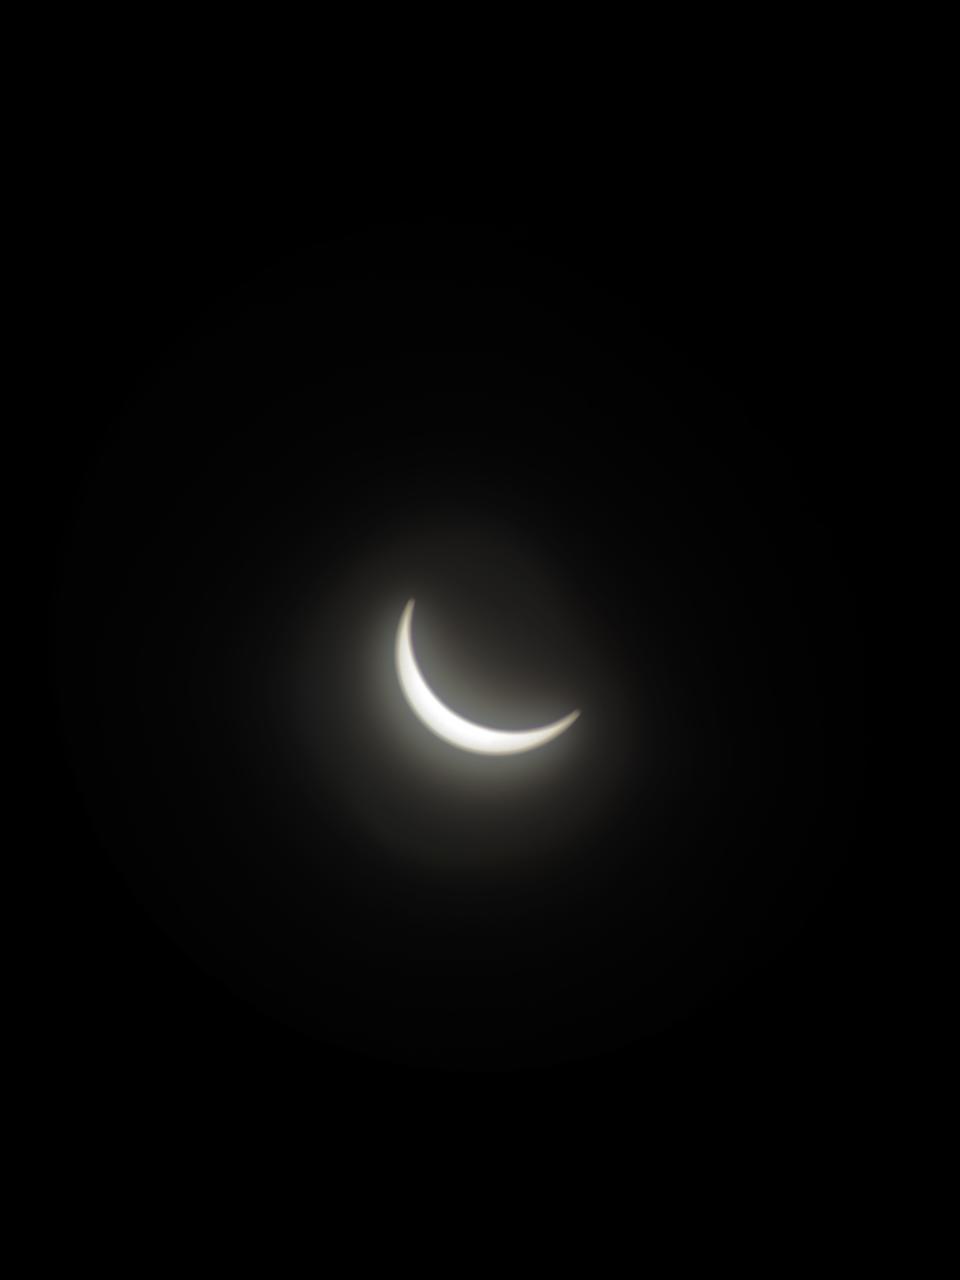 Total eclipse shot through Vaonis Hestia telescope showing partial eclipse